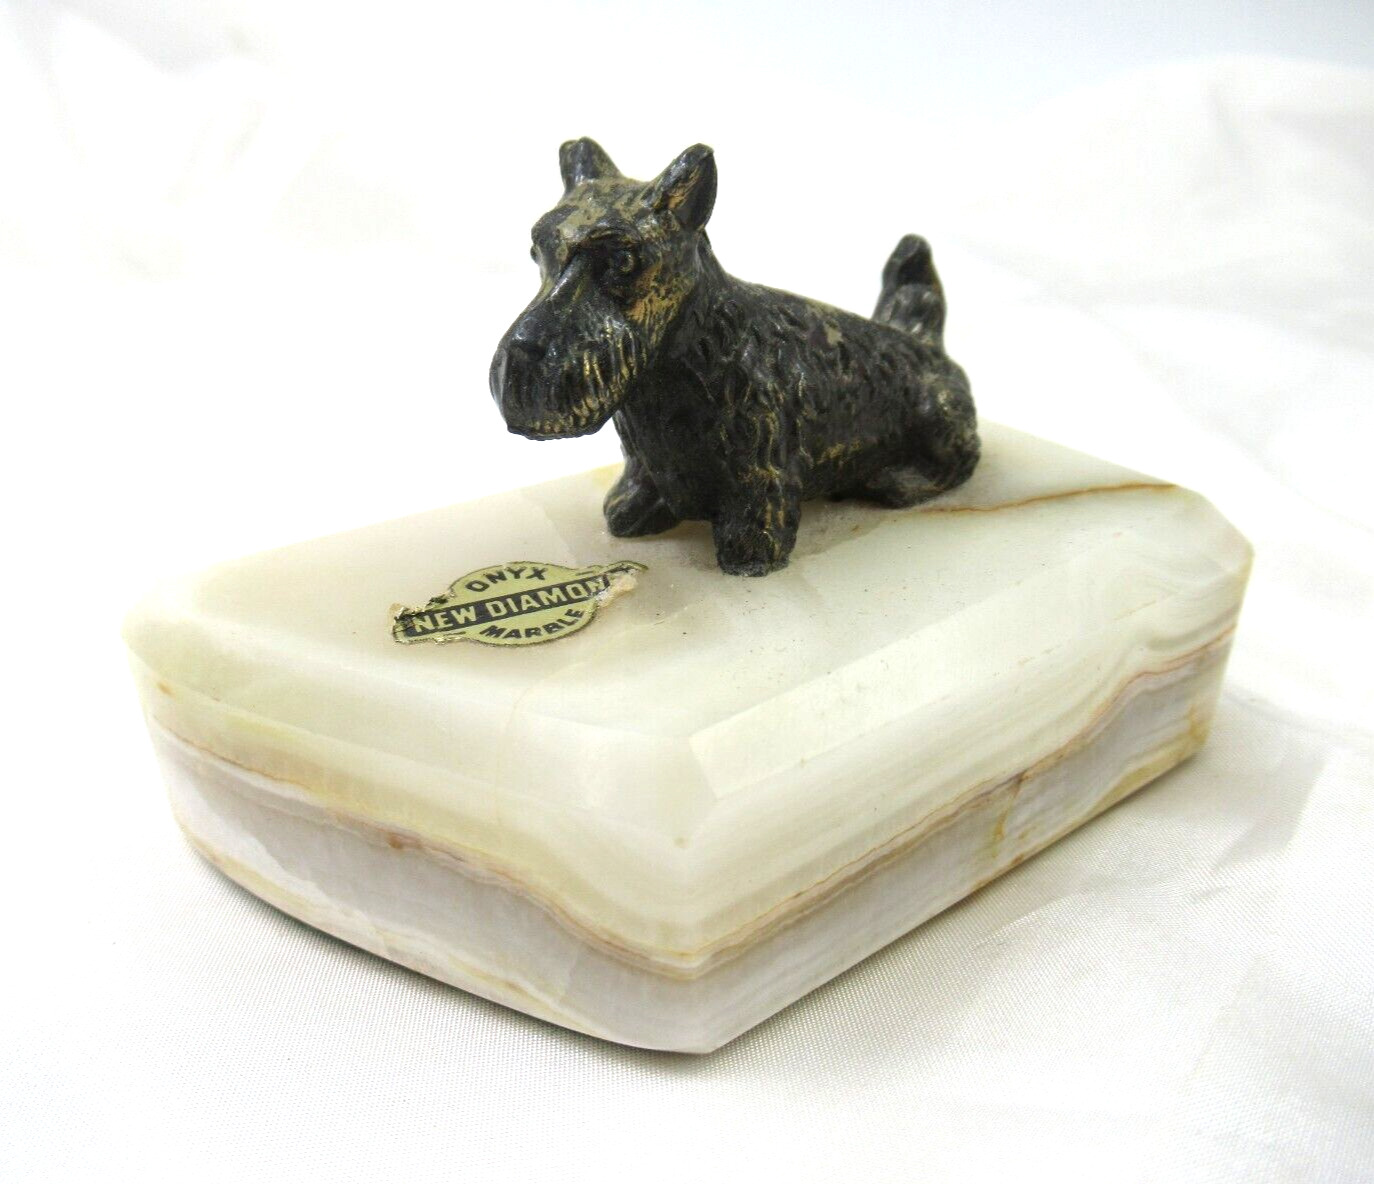 Terrier Dog mounted on New Diamond Onyx Marble.Vintage Metal Cast Bronze